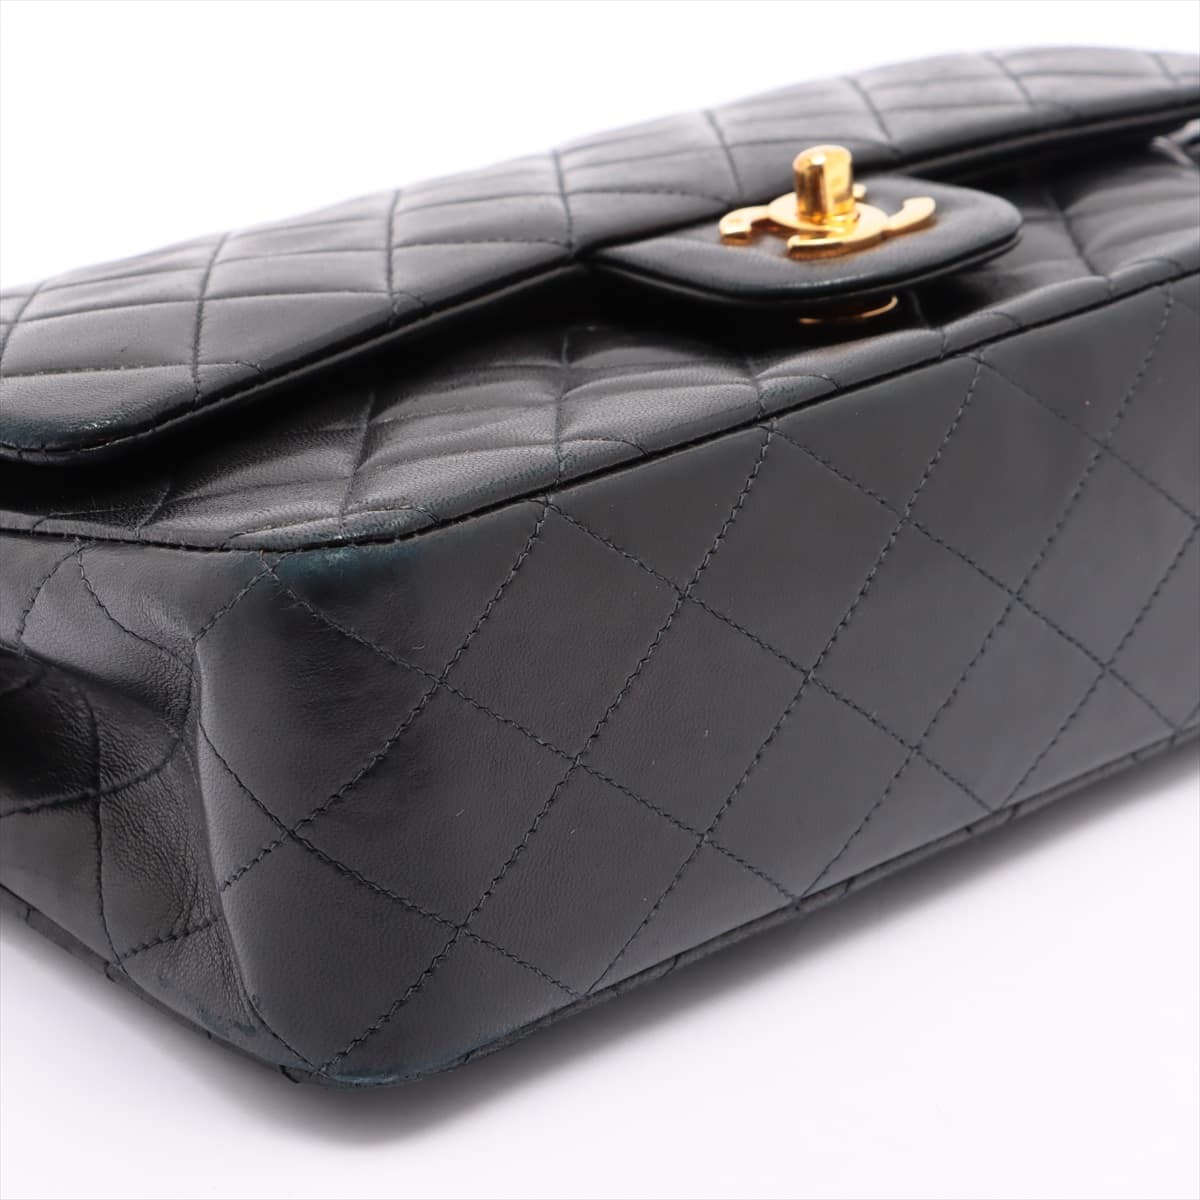 Chanel Matelasse Lambskin Double flap Single chain handbag Black Gold Metal fittings 5XXXXXX